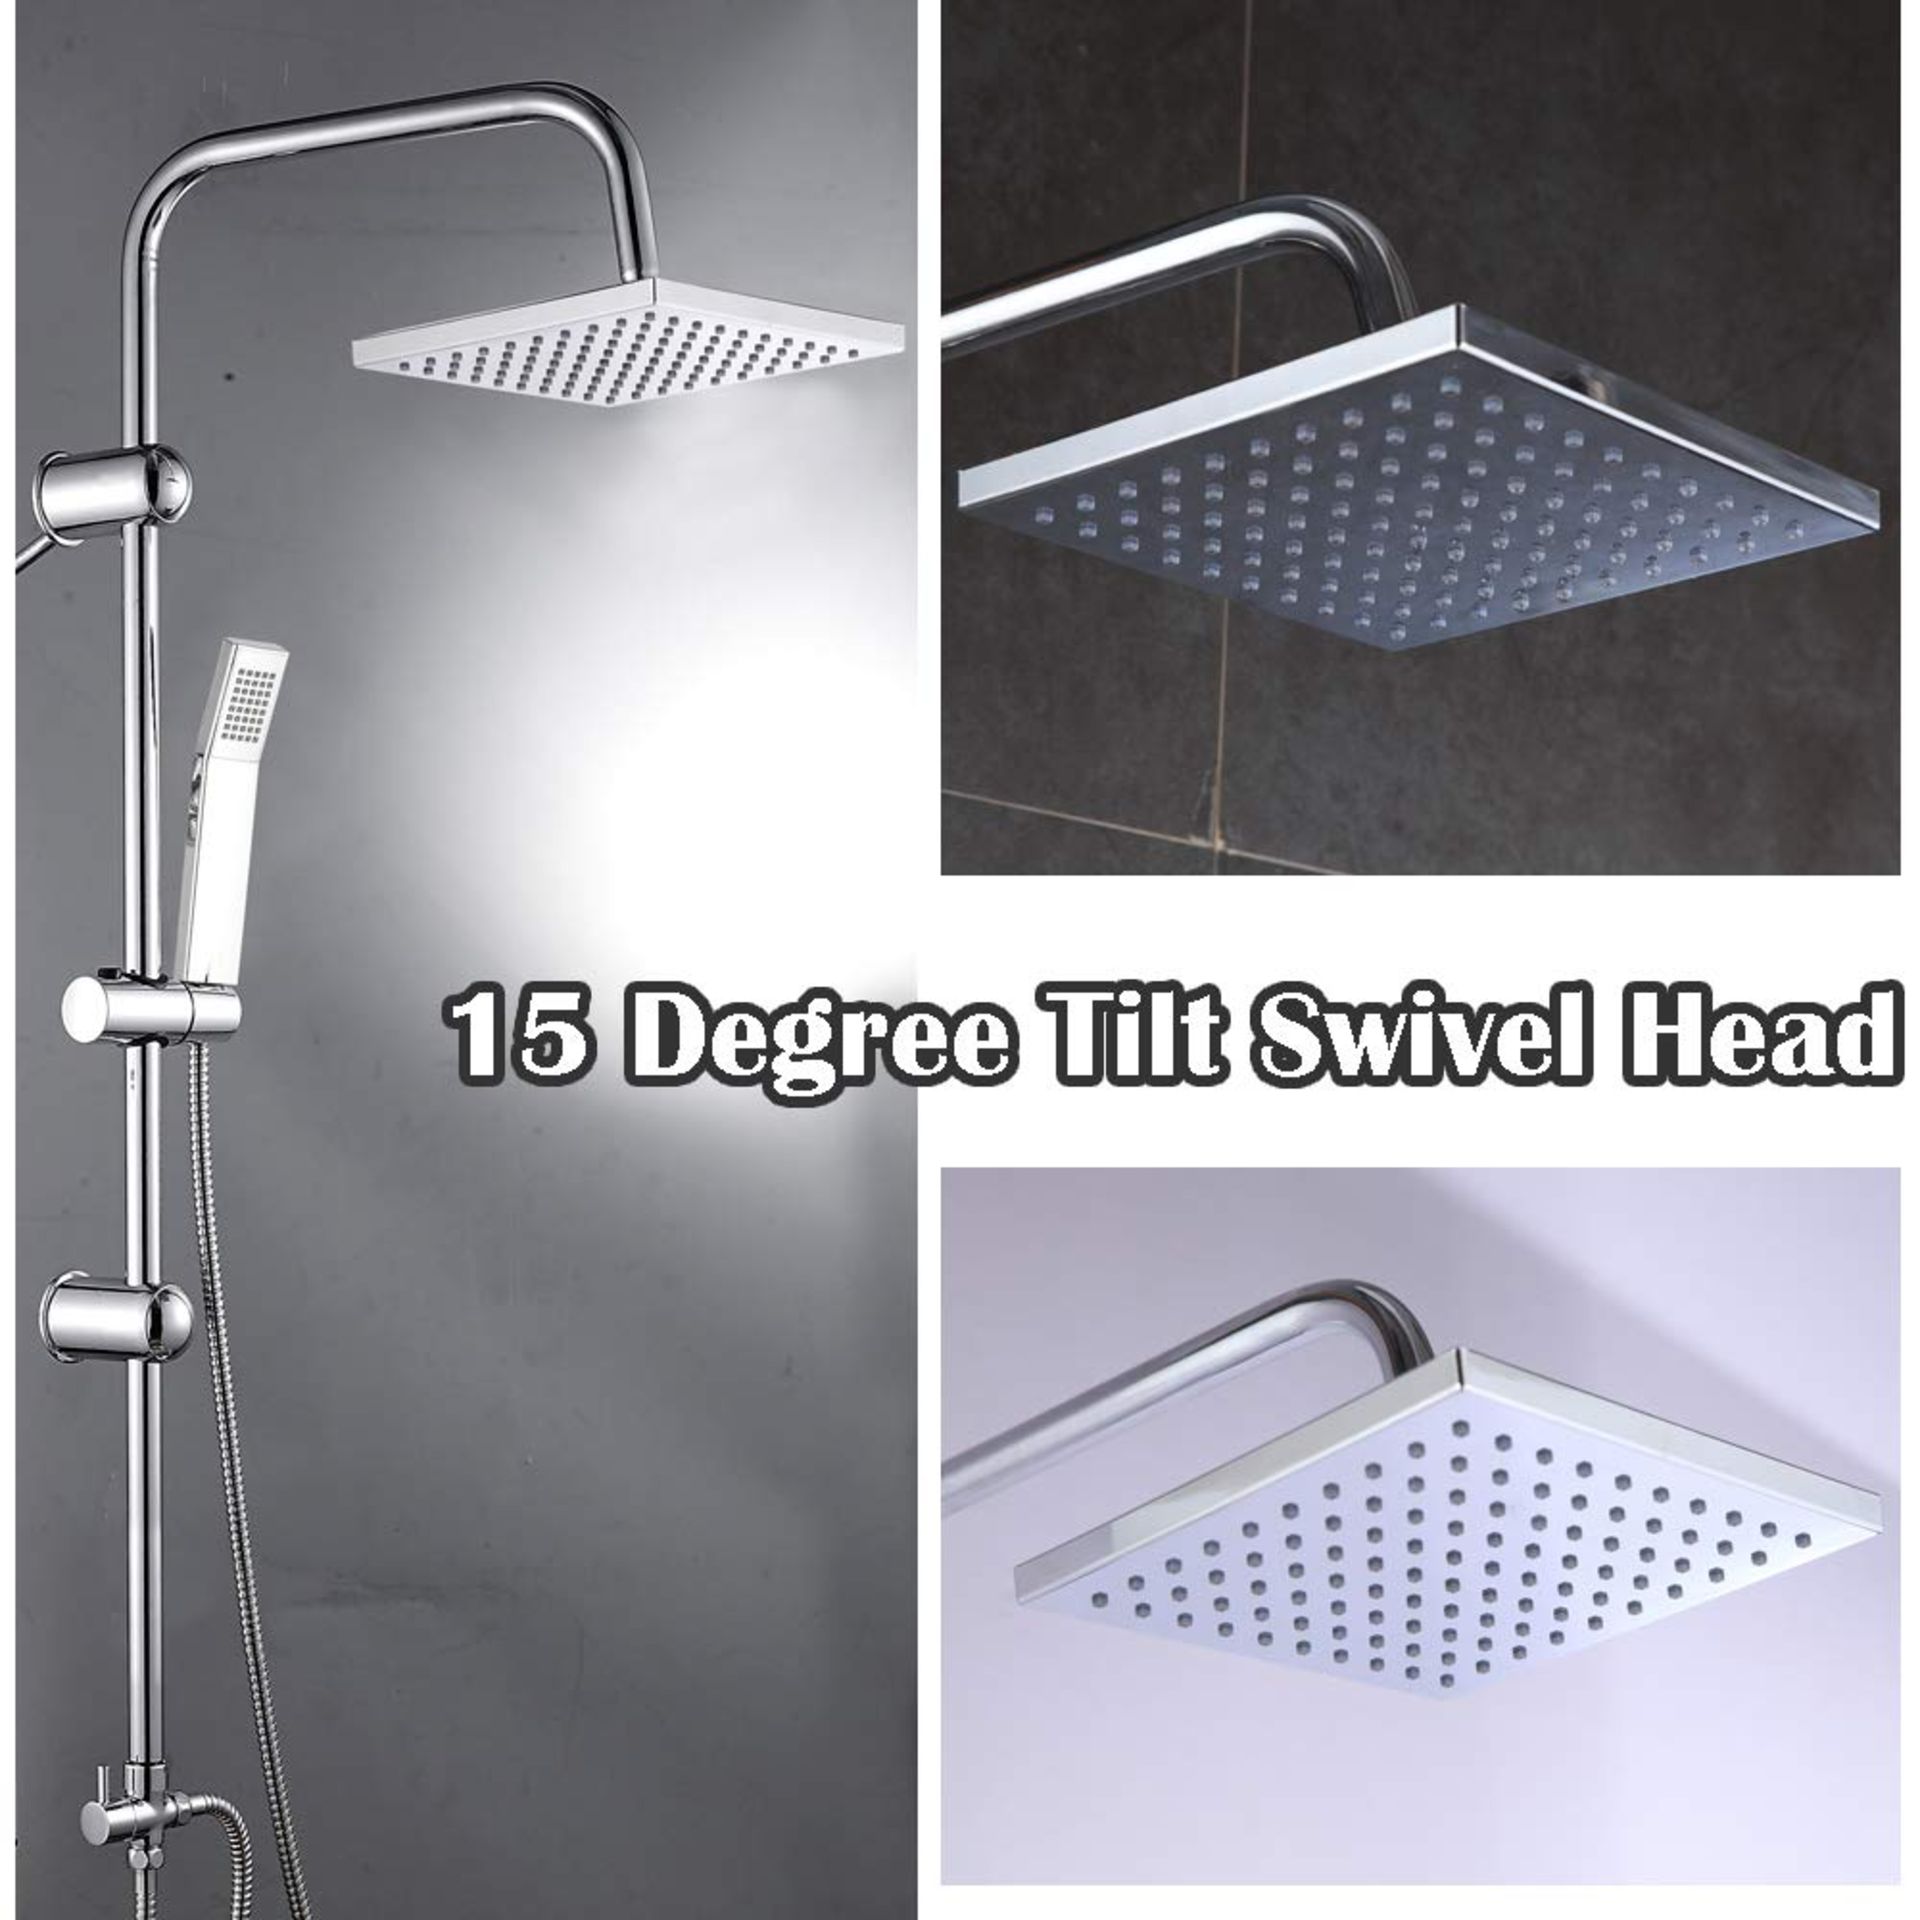 (XL120) Modern Chrome Riser Rail Mixer Square Shower Head Kit for Bathroom. Exceptional Build Q...( - Image 3 of 3